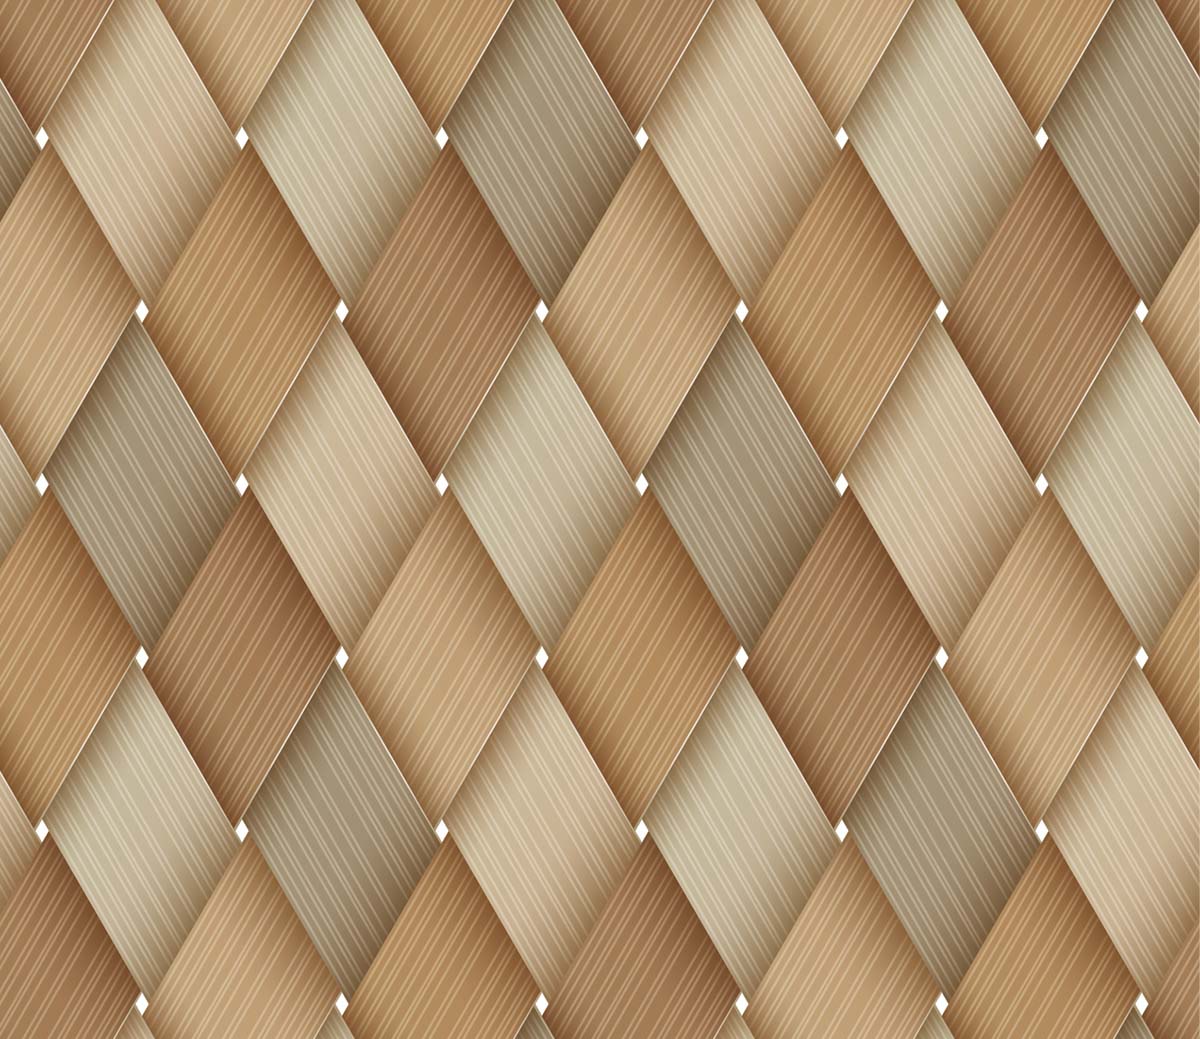 A close up of a pattern